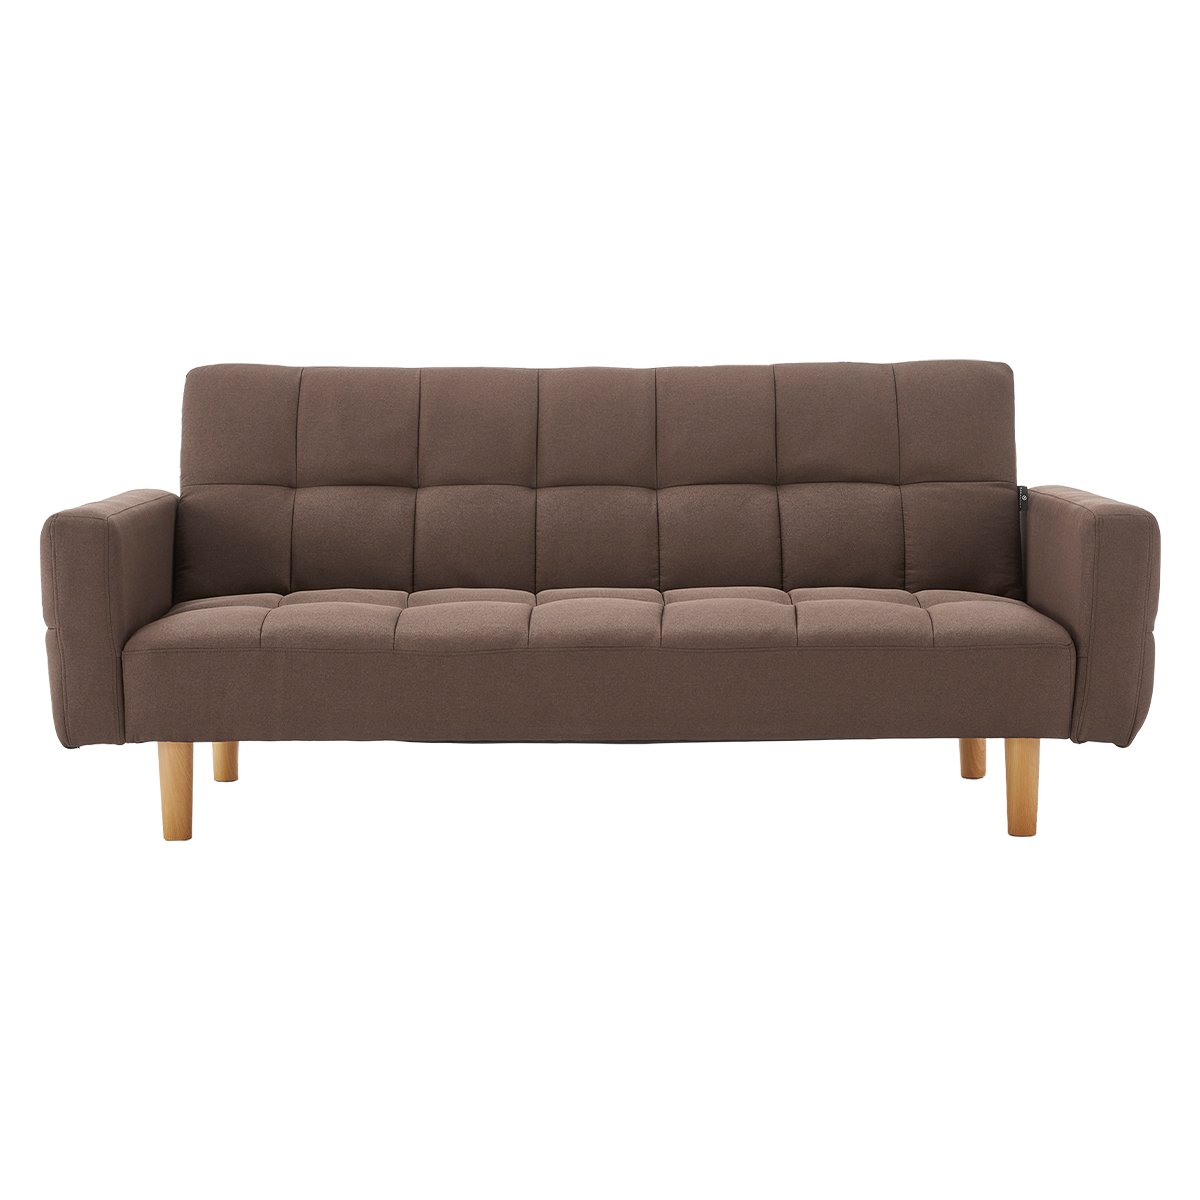 Sarantino 3-Seater Fabric Sofa Bed Futon - Brown 1